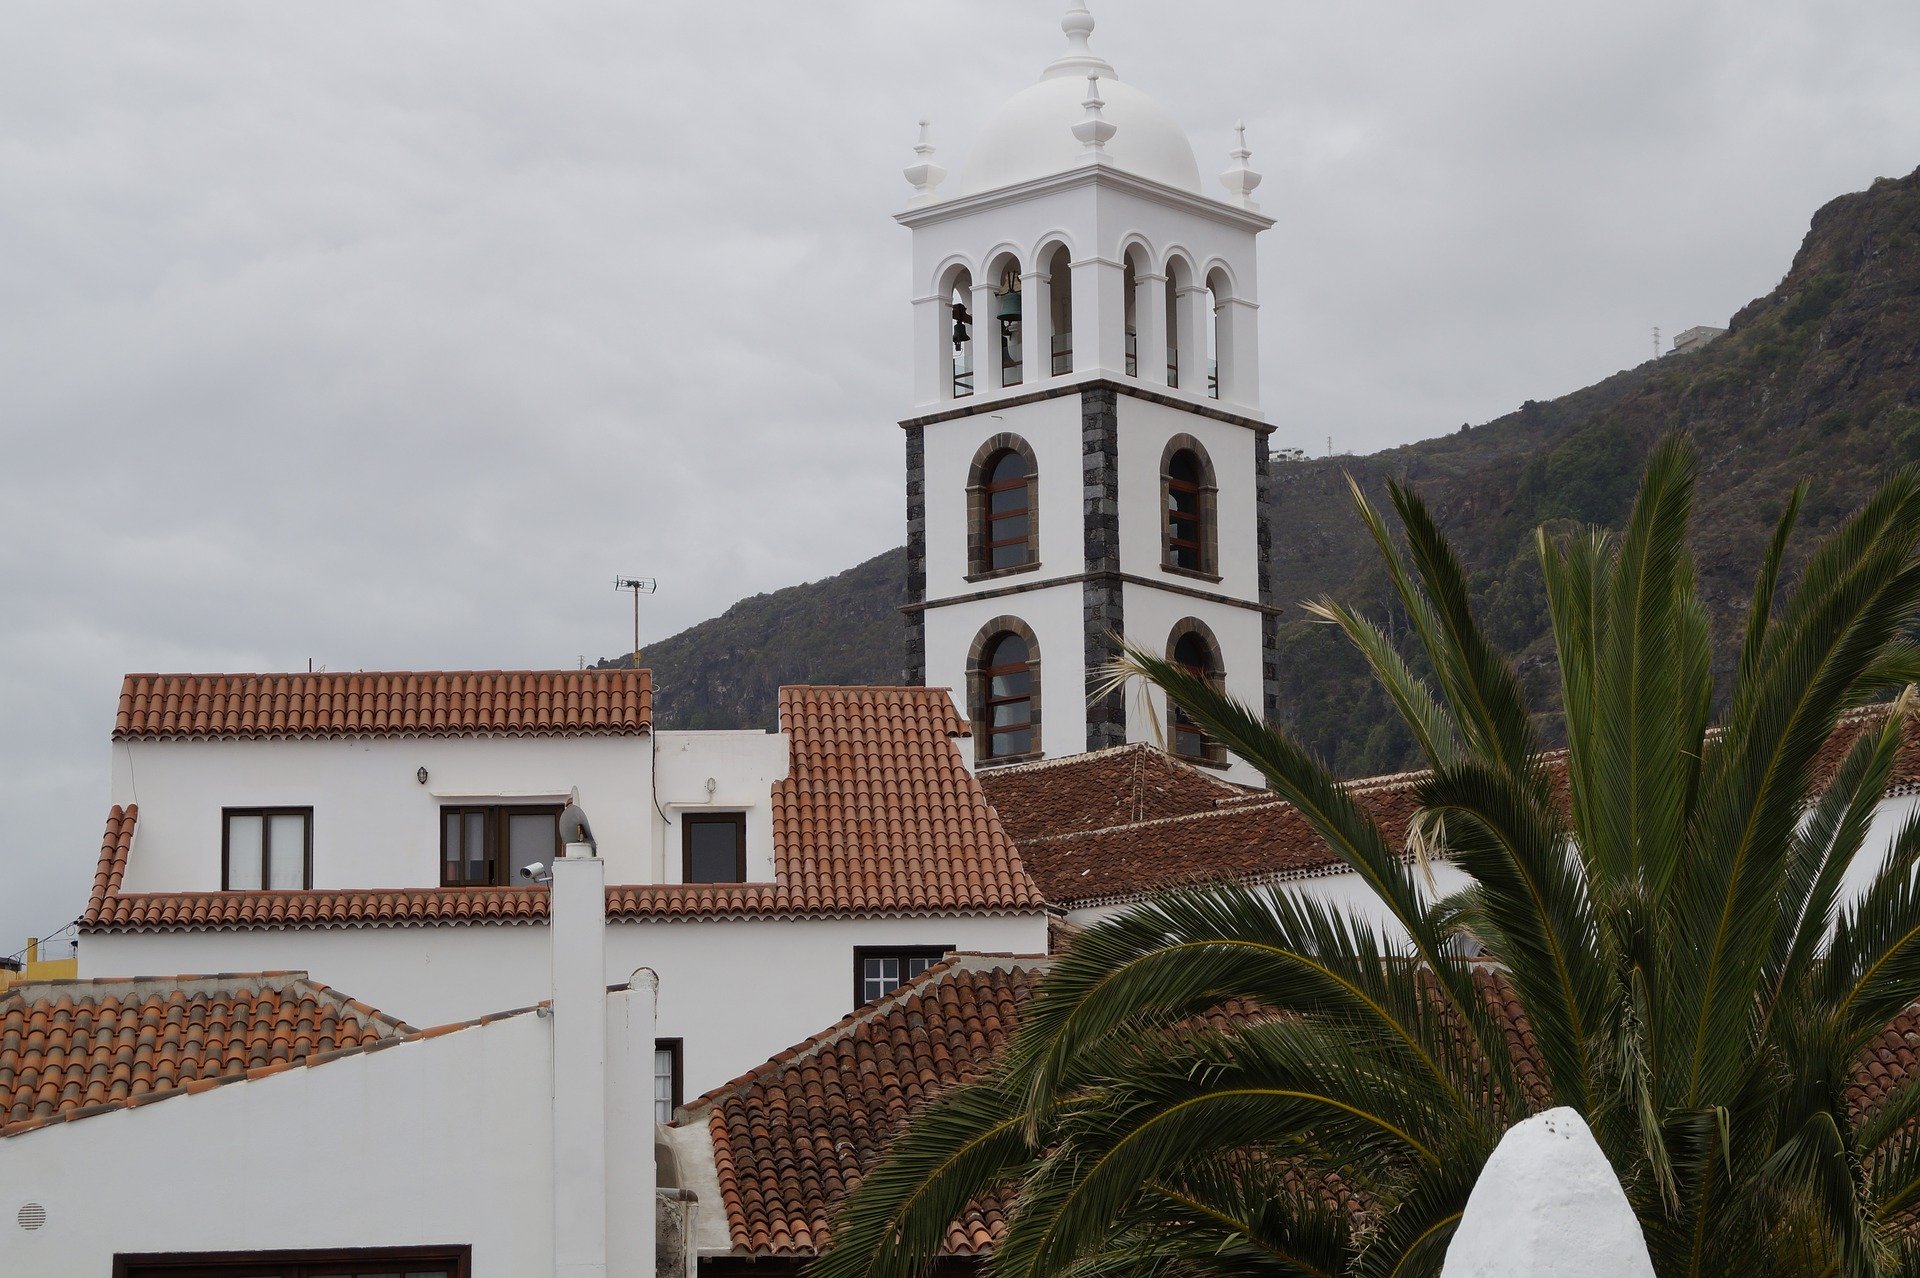 Where to stay in Tenerife Garachico